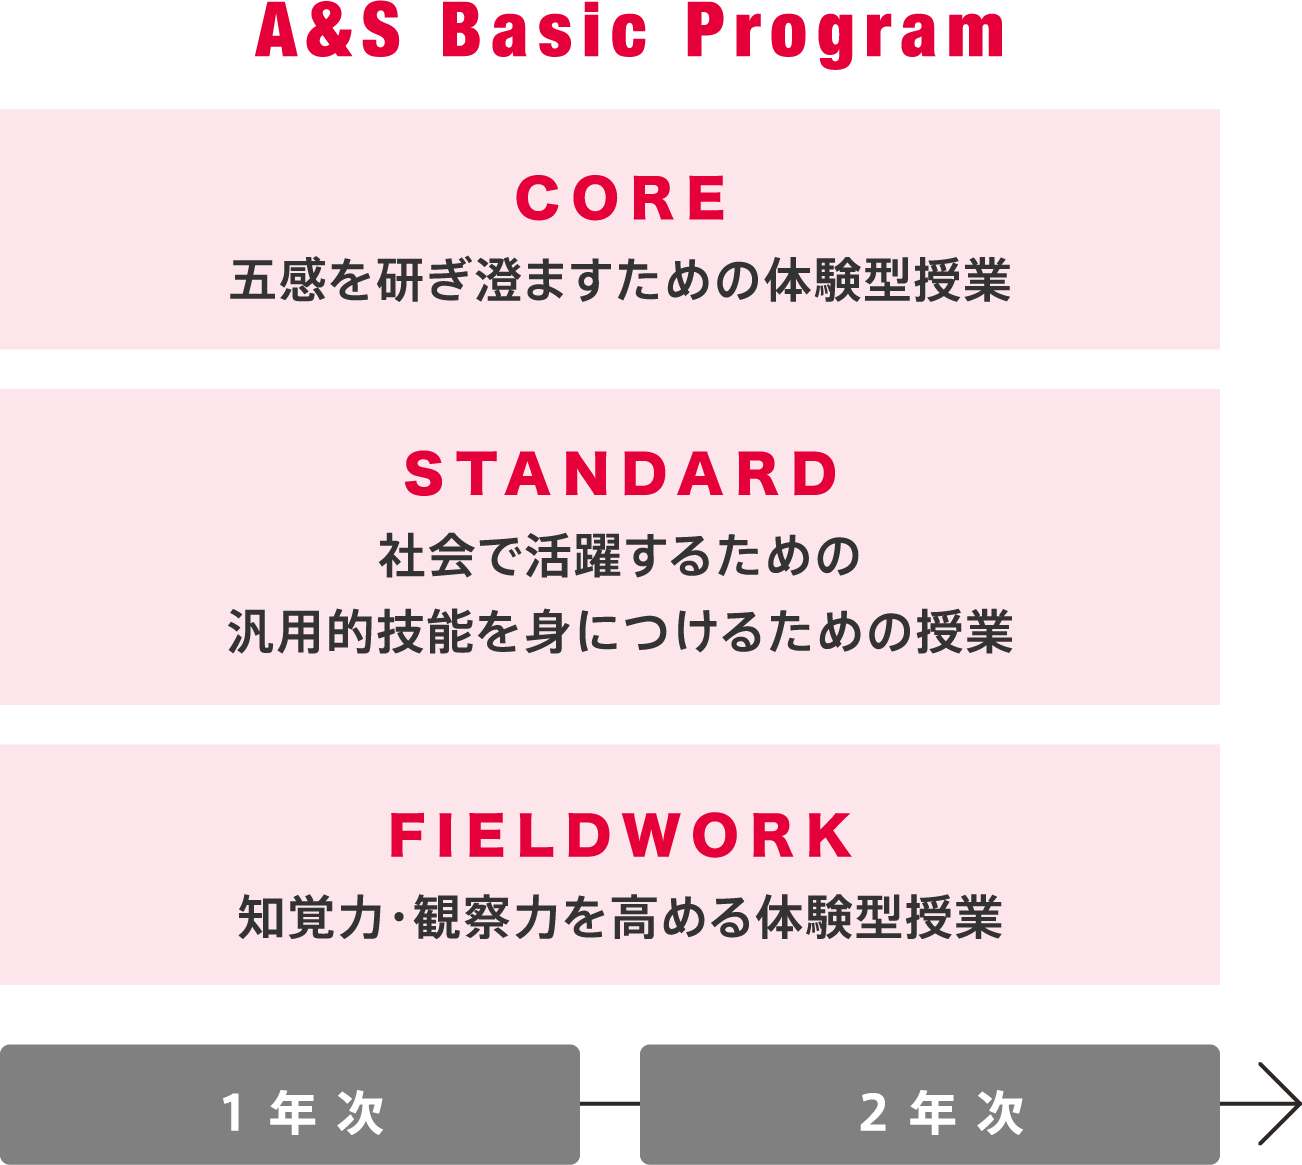 A&S Basic Program